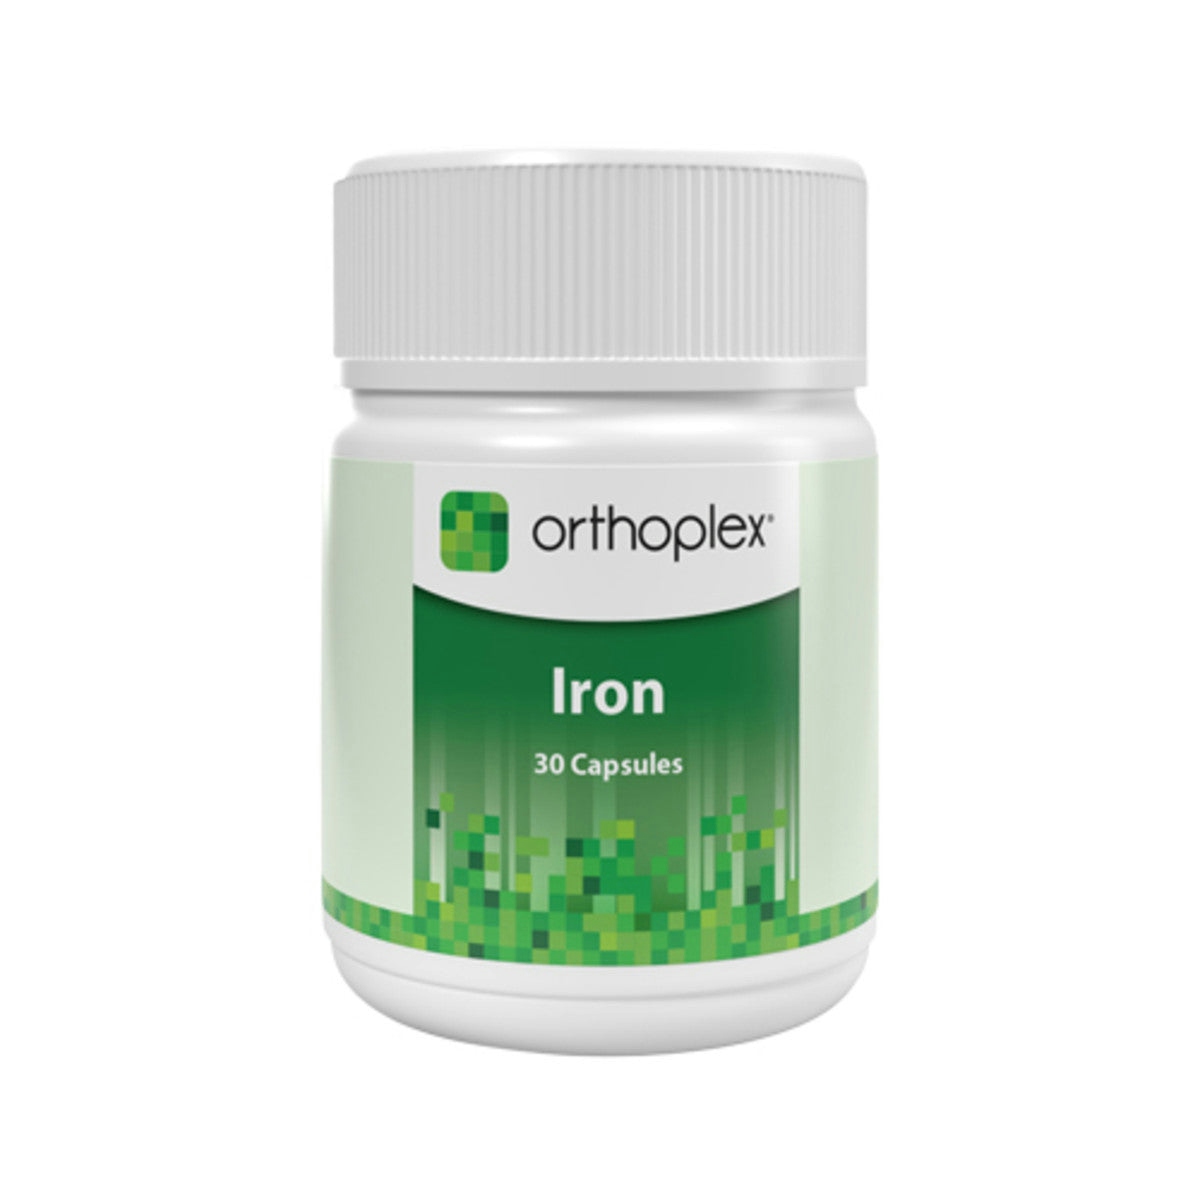 image of Orthoplex Green Iron 30c on white background 